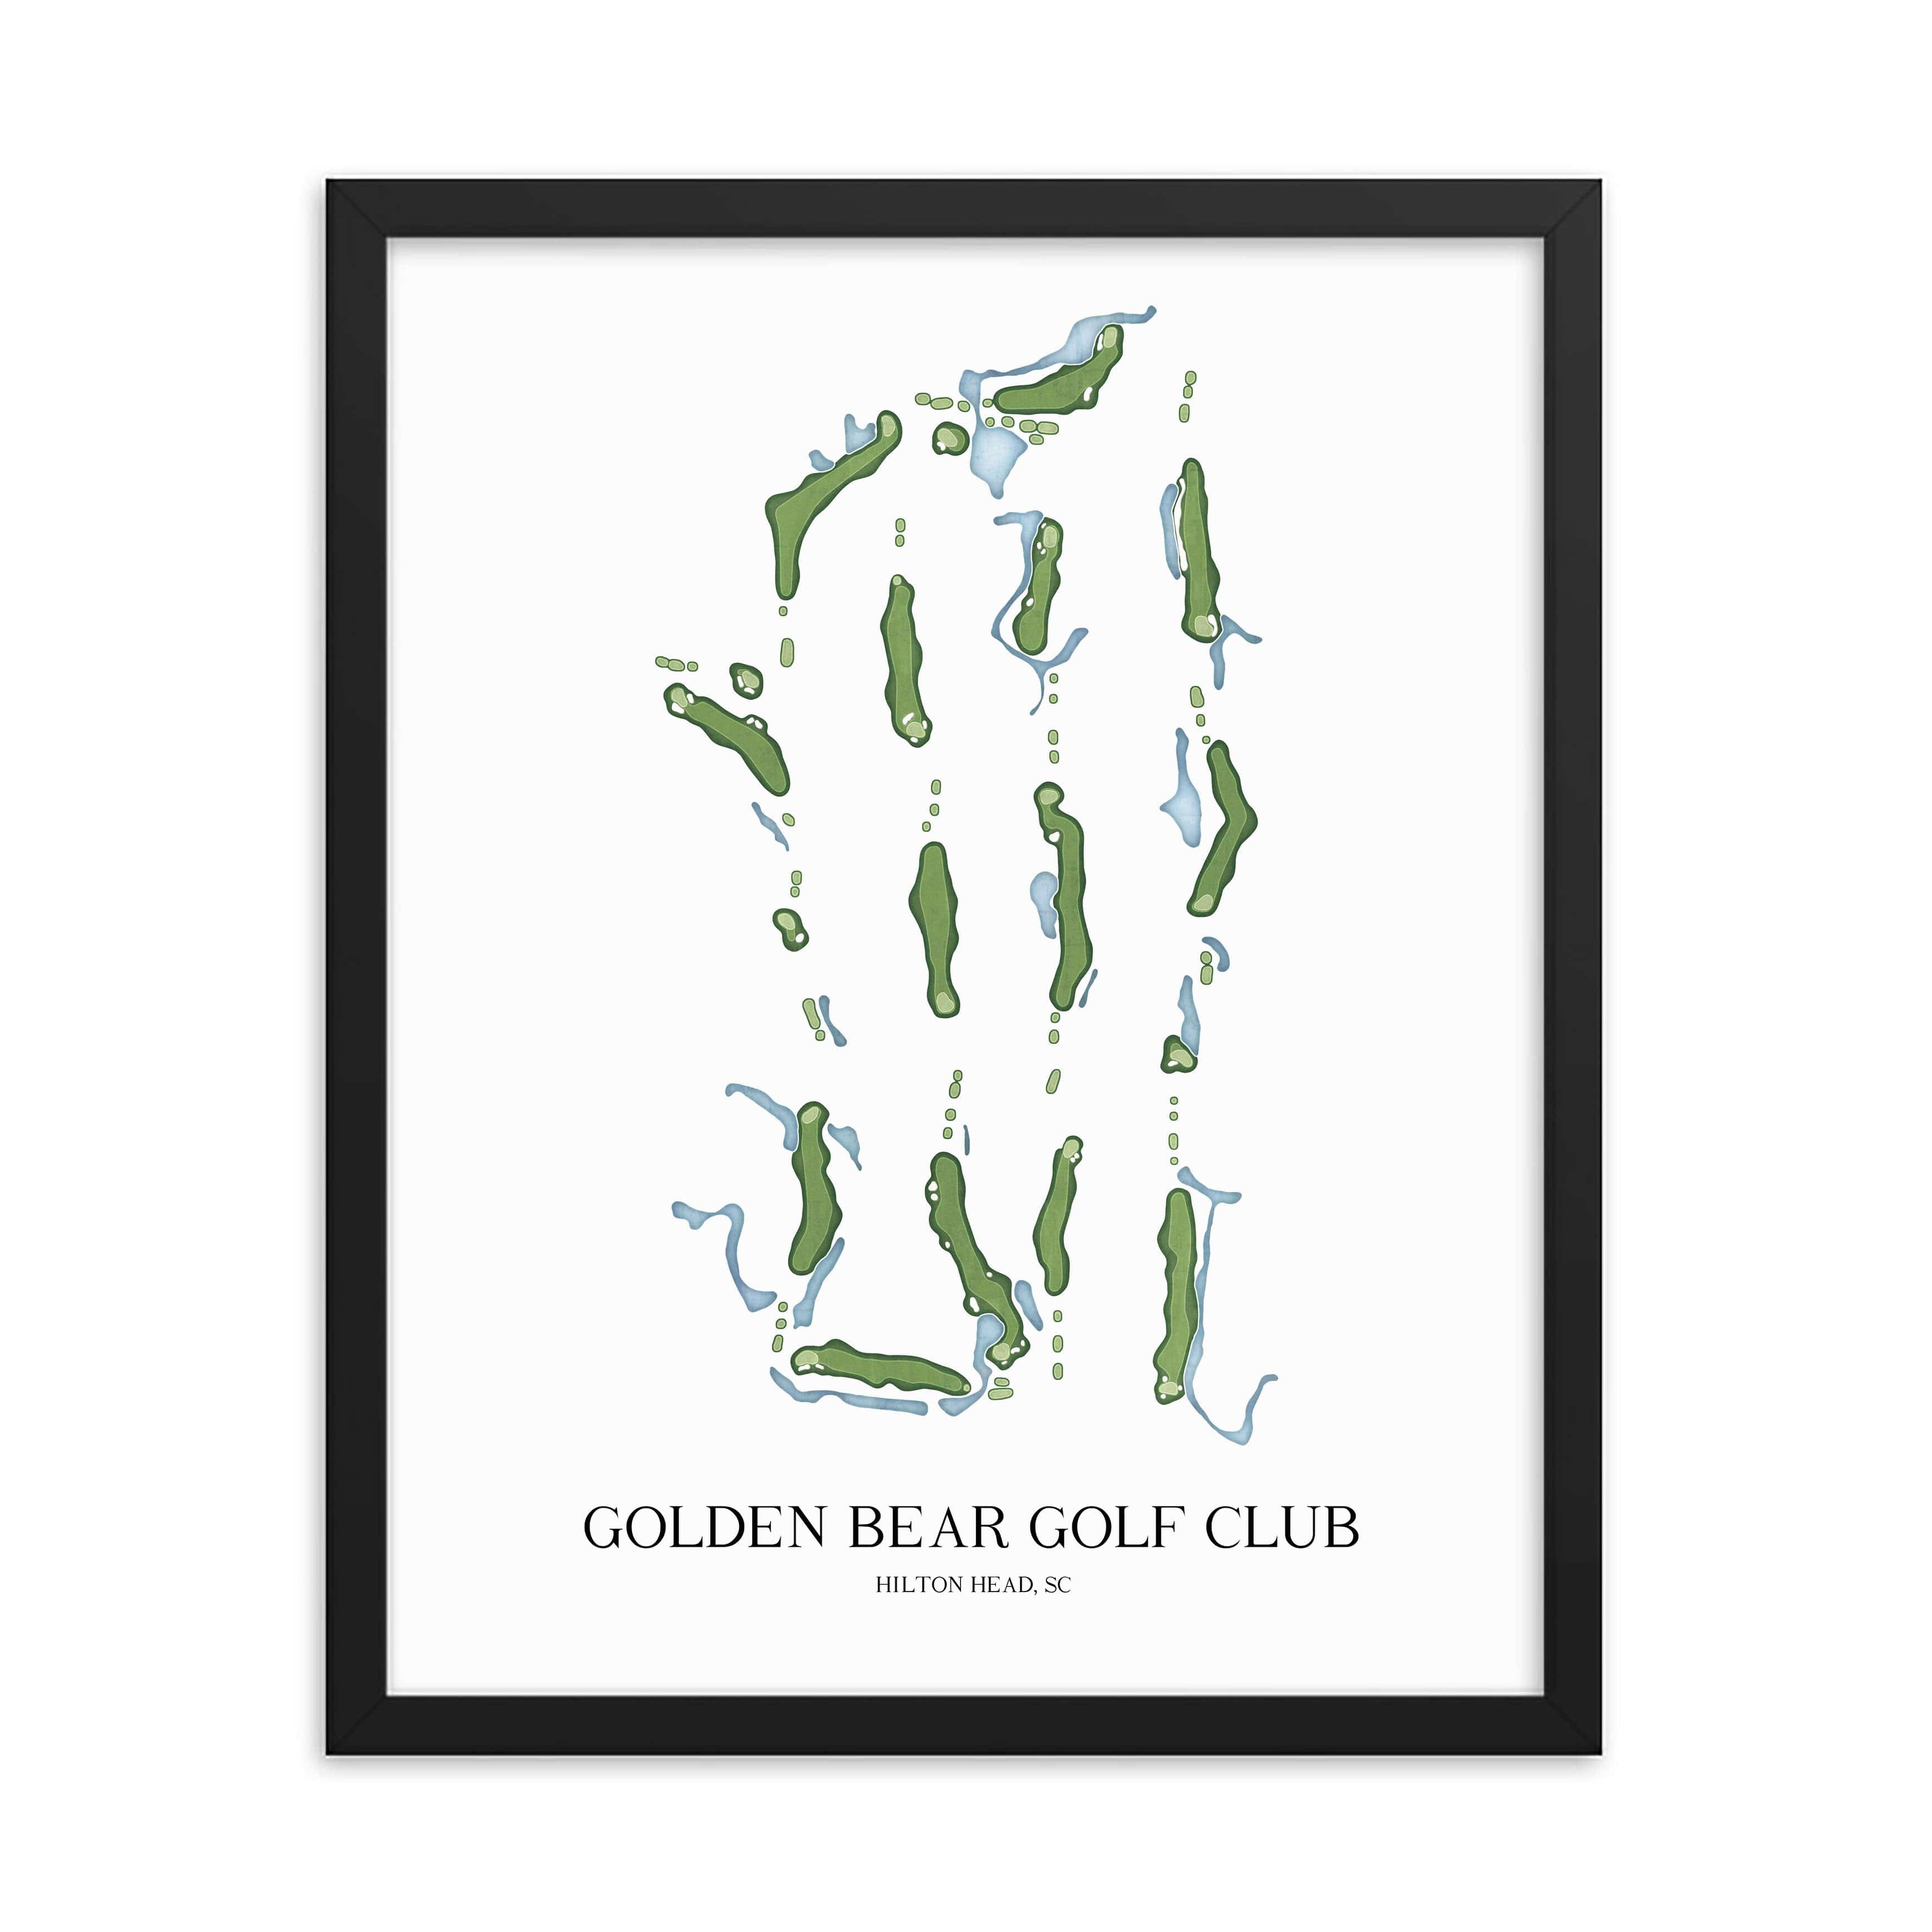 The 19th Hole Golf Shop - Golf Course Prints -  Golden Bear Golf Club Golf Course Map